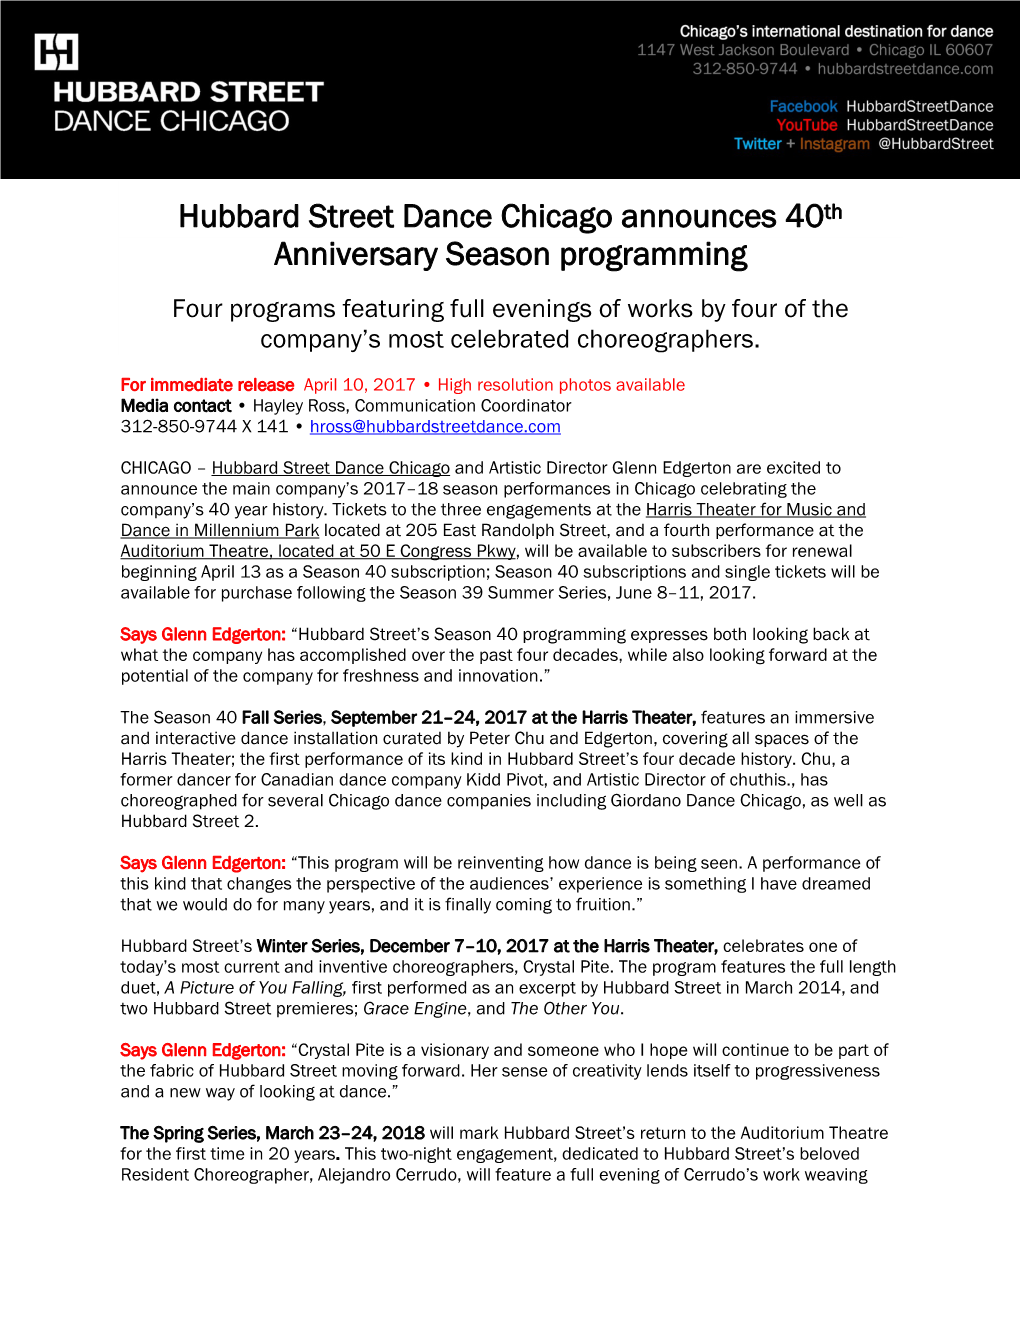 Hubbard Street Dance Chicago Announces 40Th Anniversary